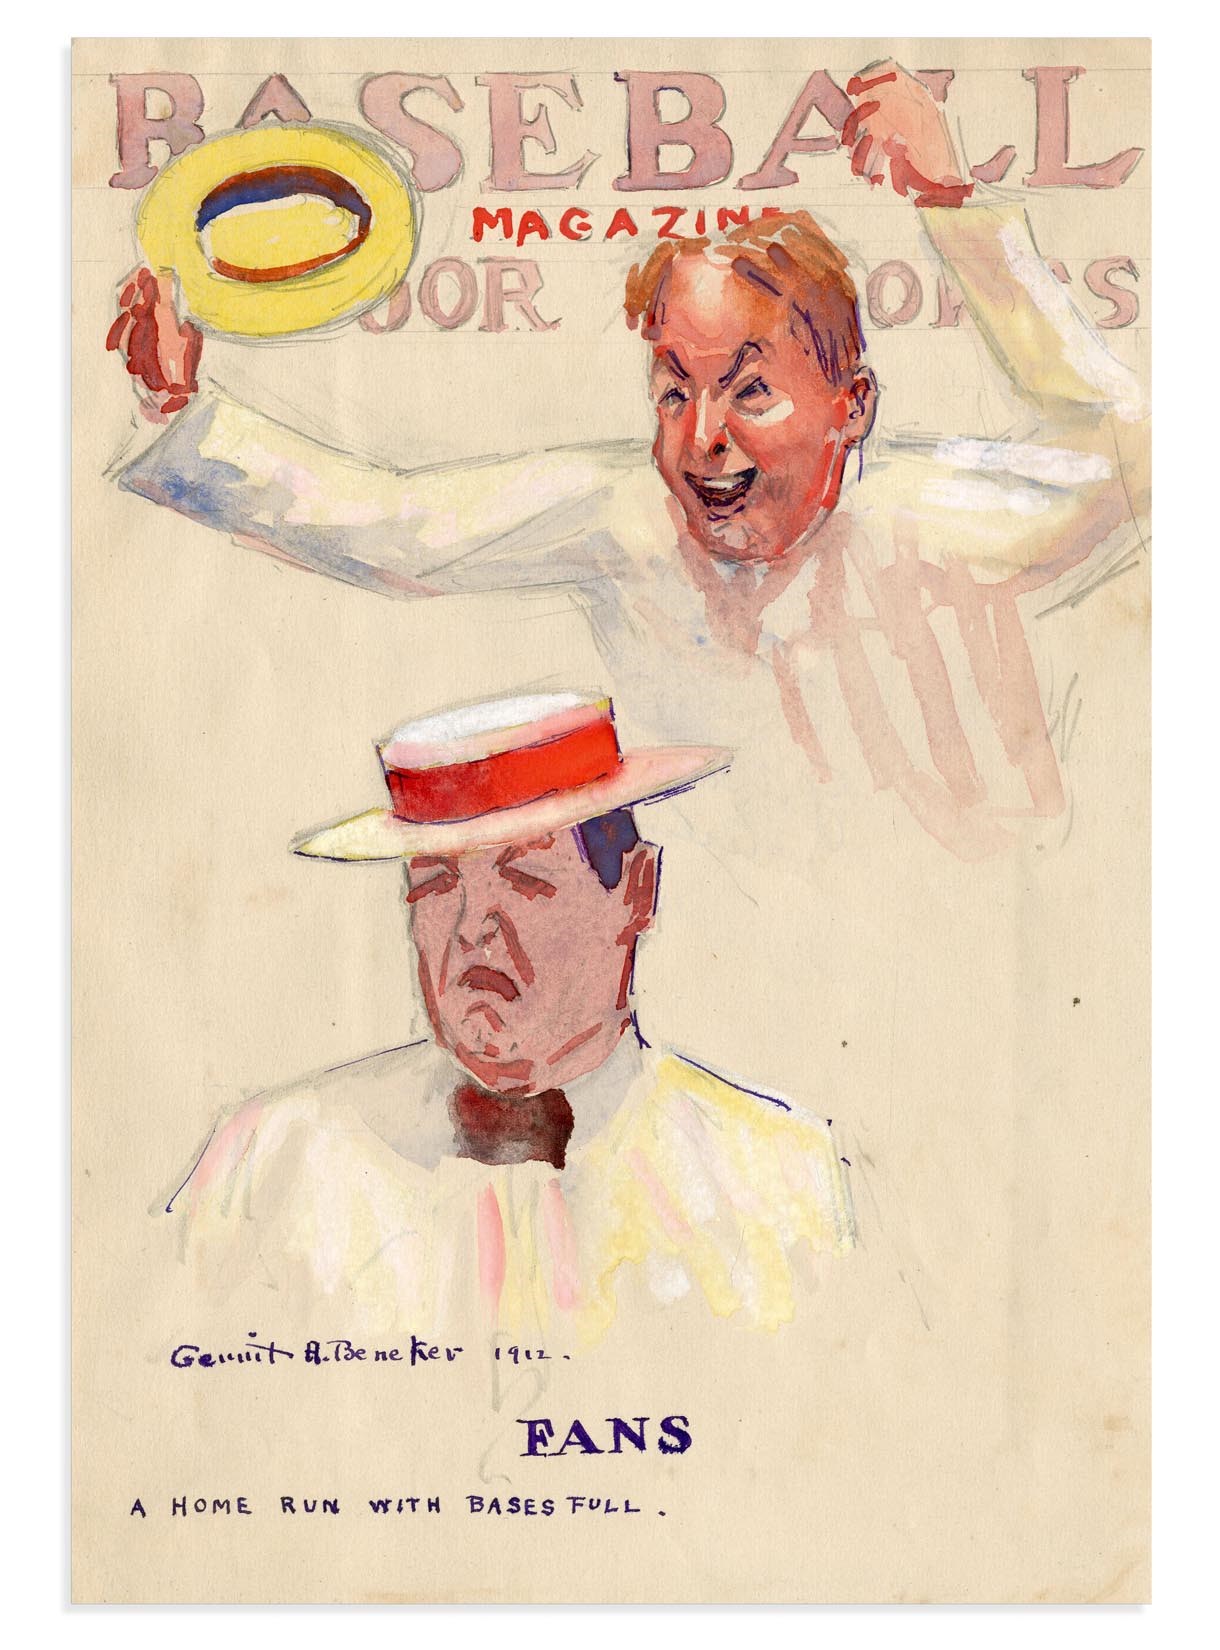 The Baseball Magazine Original Art - 1912 Baseball Magazine "Fans" Cover Art Study by Gerrit Beneker (1882-1934)